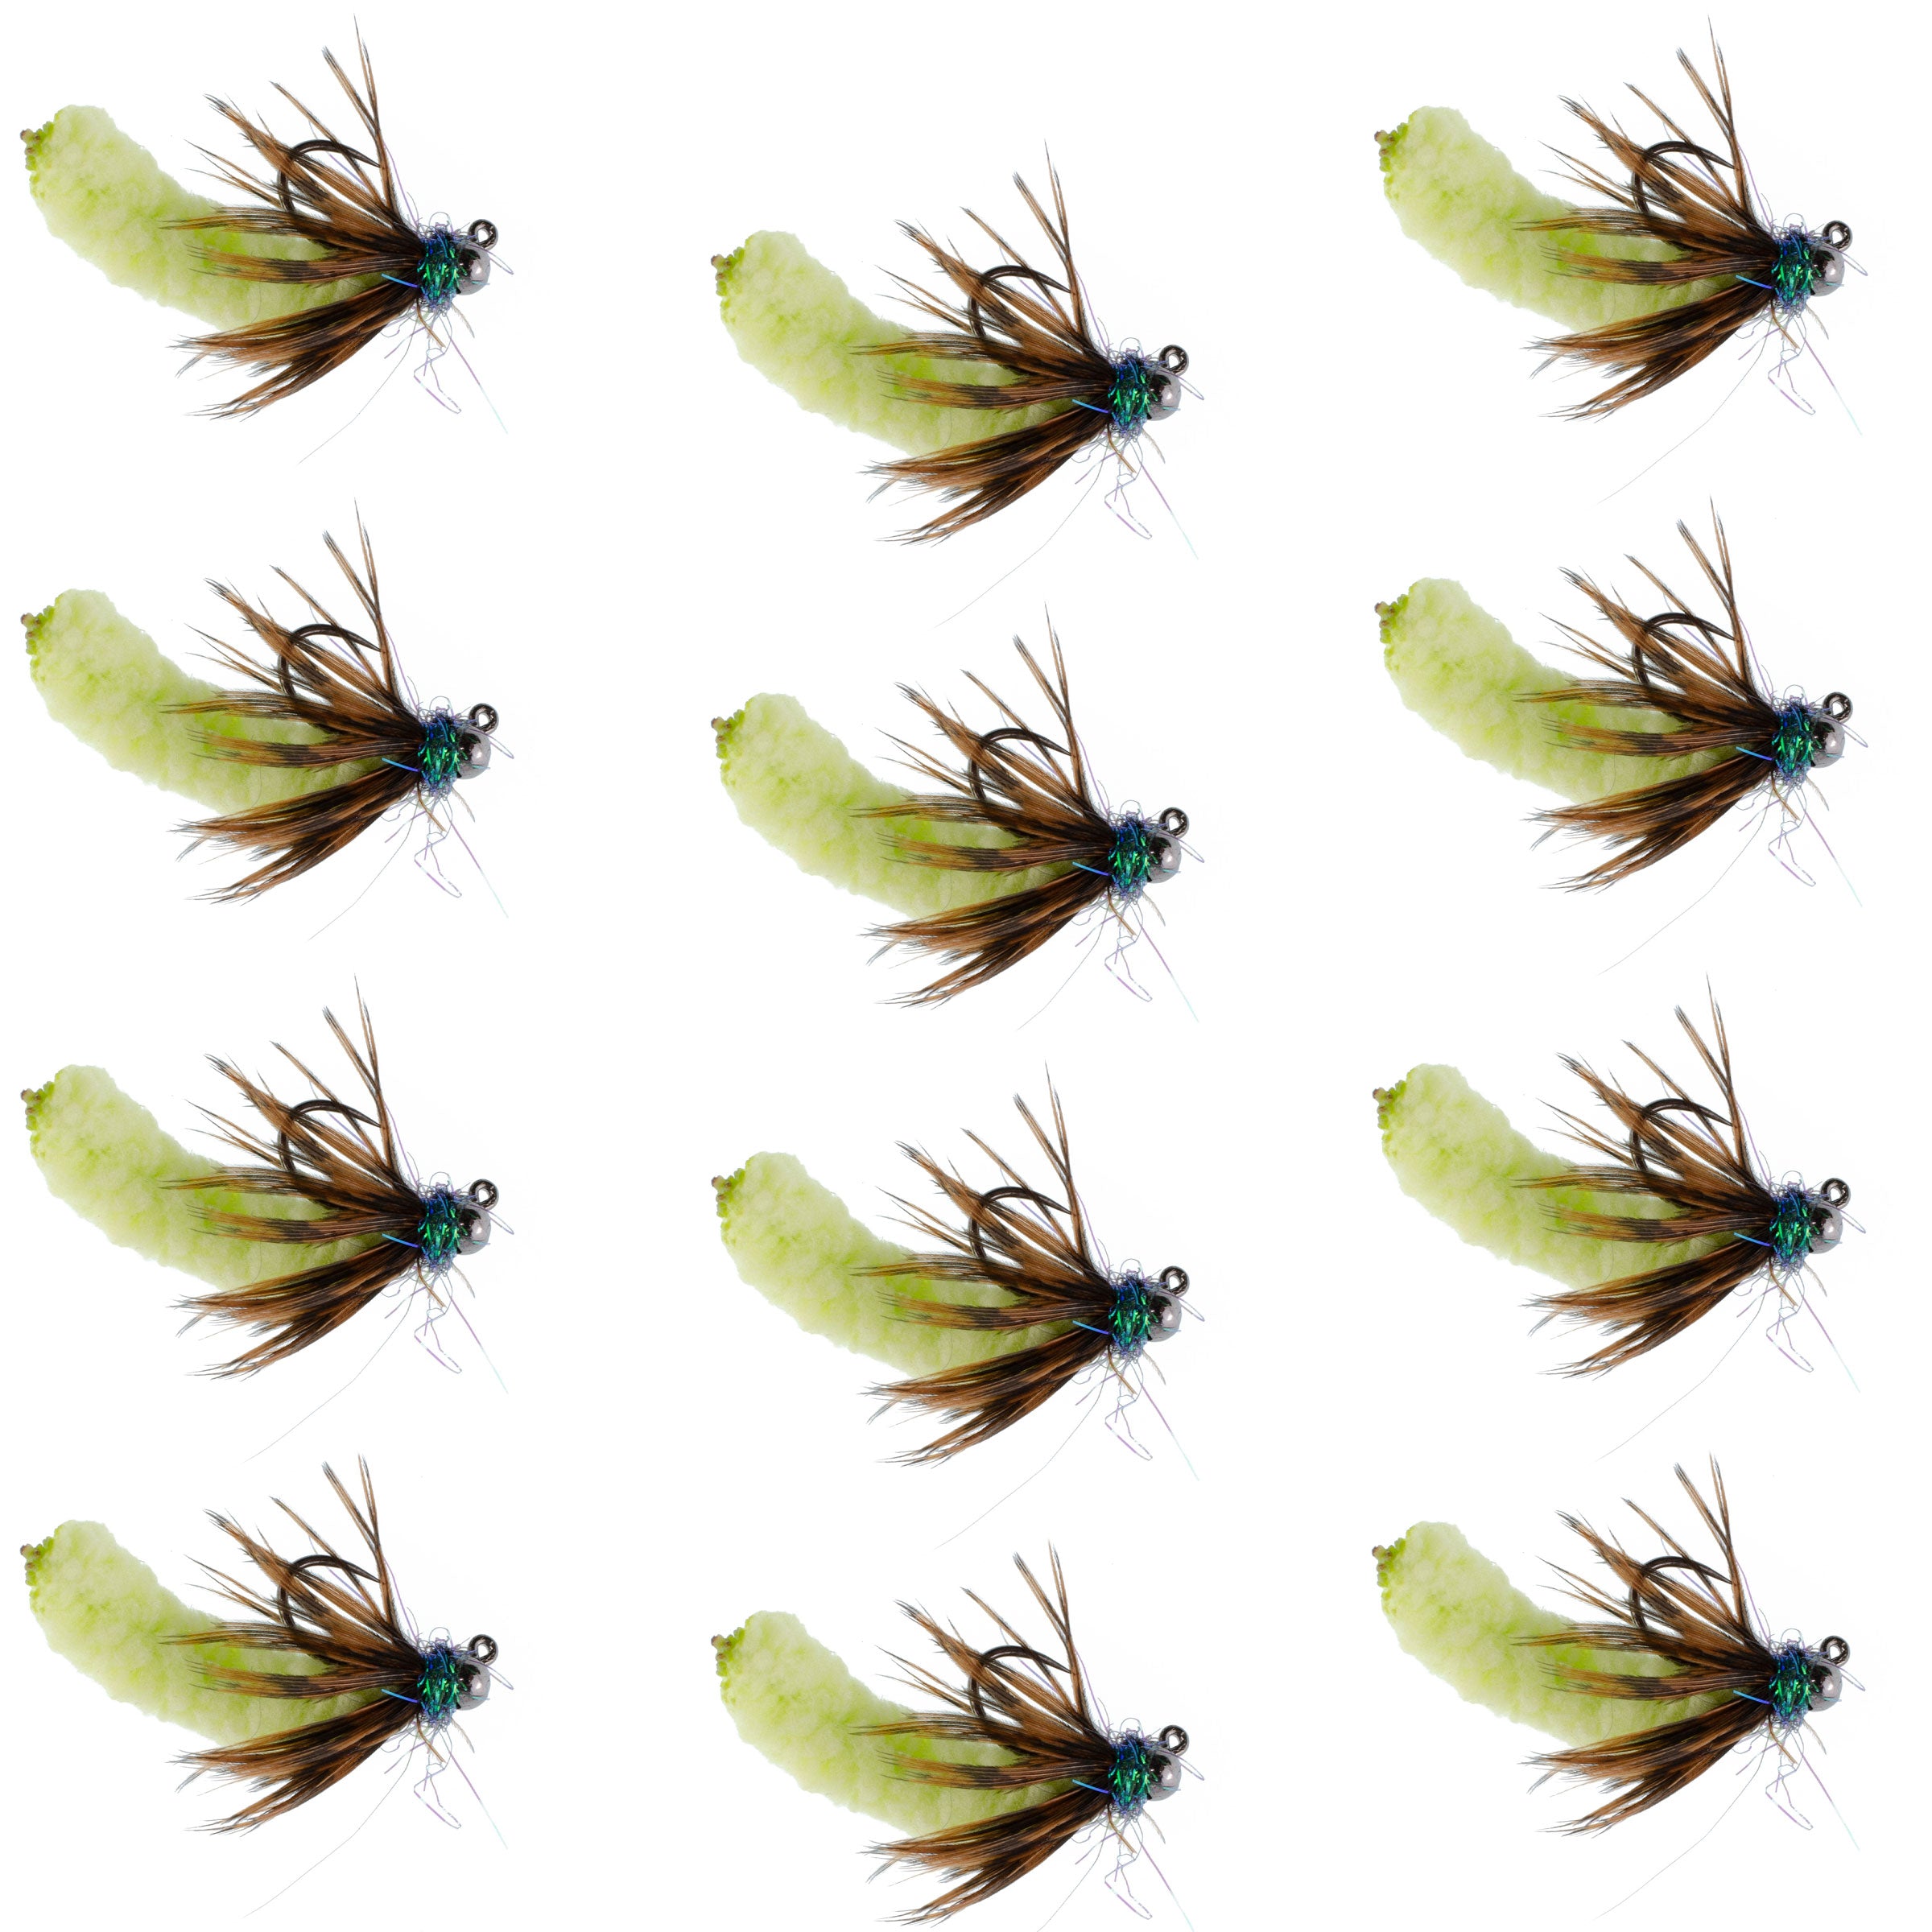 Mosca táctica con cuentas de tungsteno Chartreuse, mosca checa Euro Nymph sin púas, 1 docena de moscas, tamaño 14